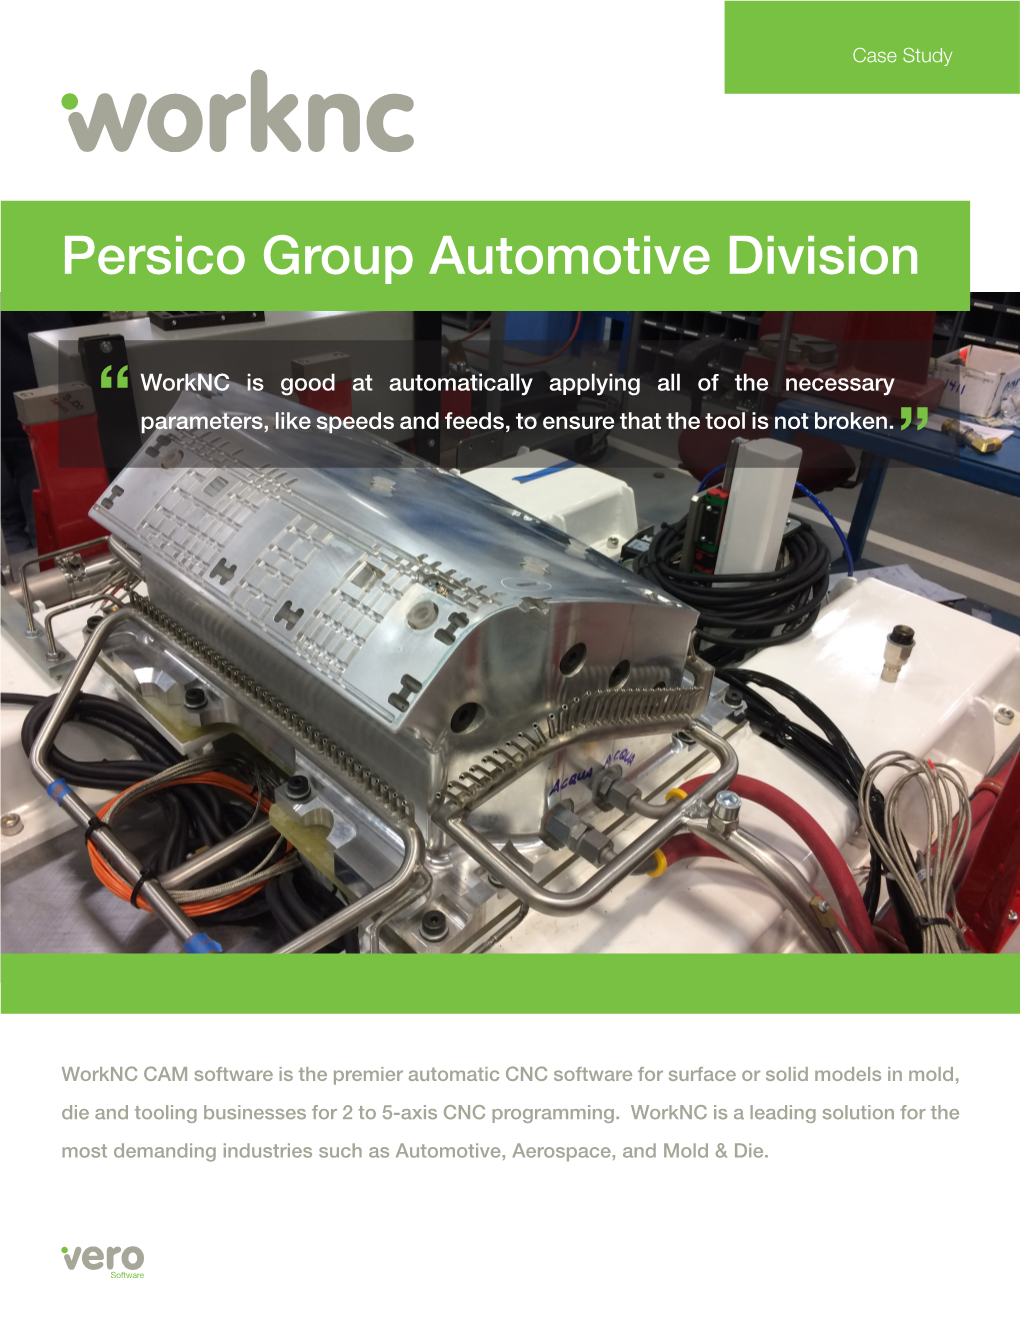 Persico Group Automotive Division